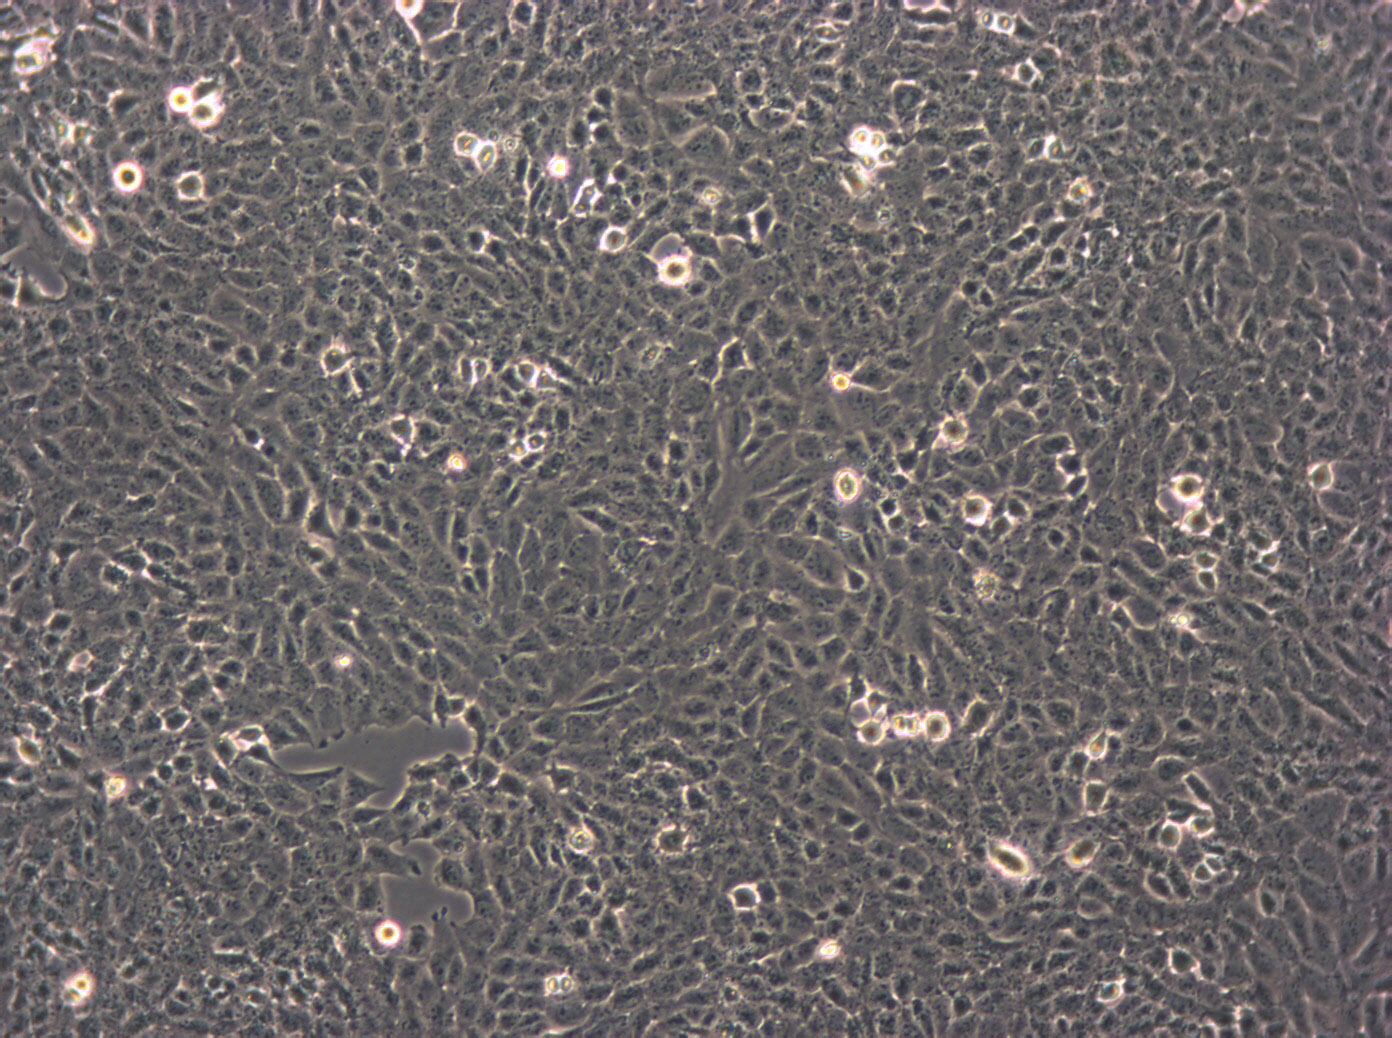 HBL-1 [Human diffuse large B-cell lymphoma] Cells(赠送Str鉴定报告)|人弥漫大B淋巴瘤细胞,HBL-1 [Human diffuse large B-cell lymphoma] Cells